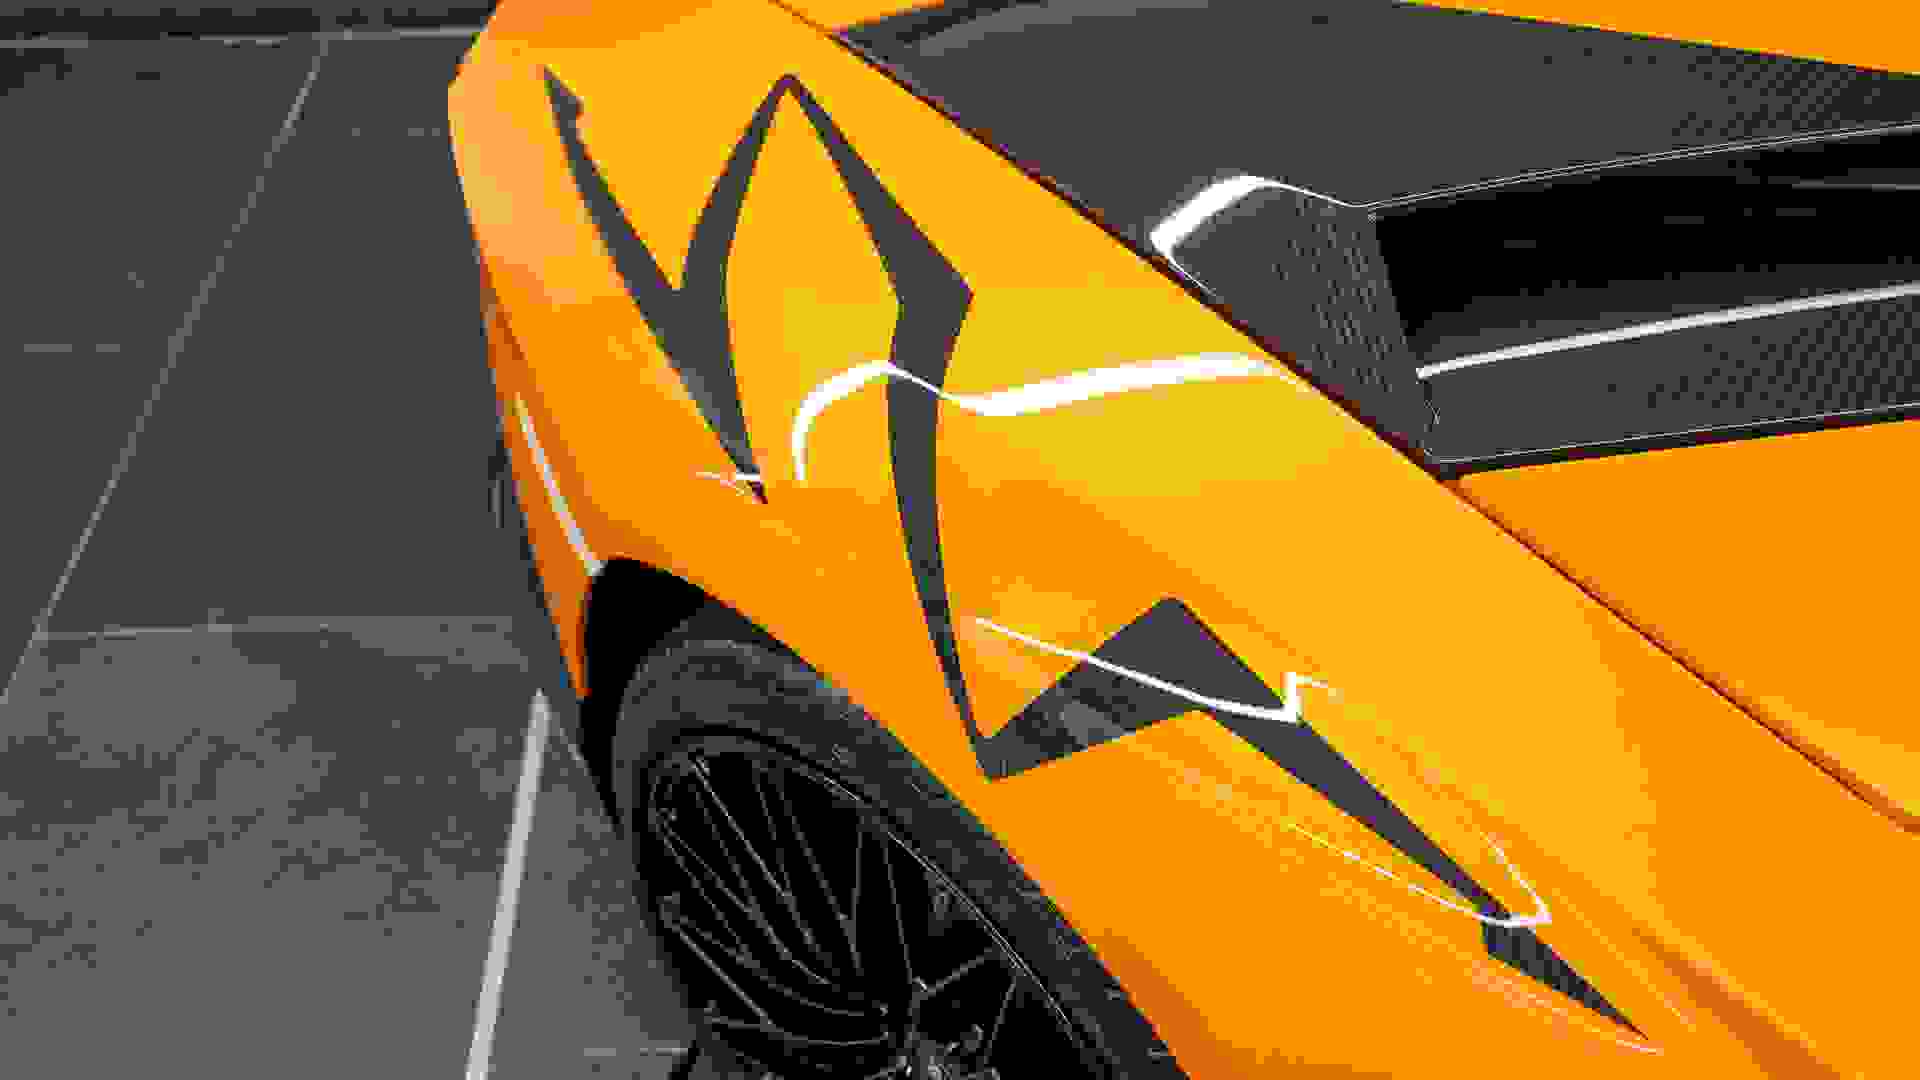 Lamborghini AVENTADOR SV Photo af51f996-18f0-455a-a6c6-a609bf21b453.jpg